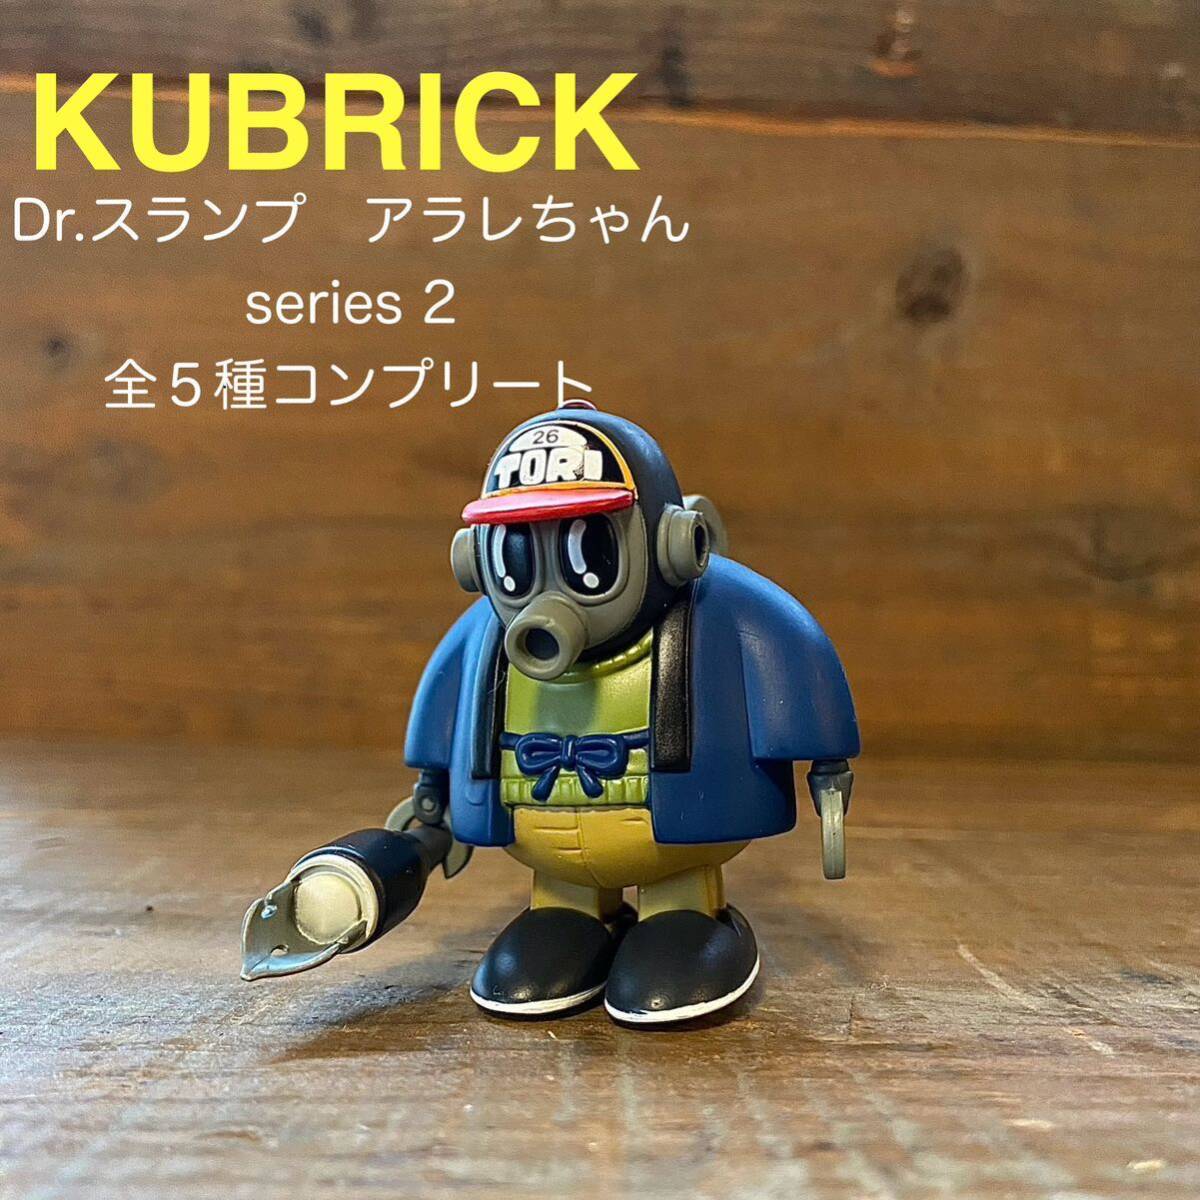 MEDICOM TOYmeti com toy KUBRICK Kubrick manga house A Toriyama Akira to rear ma Robot Dr. slump Arale-chan SERIES2 all 5 kind 